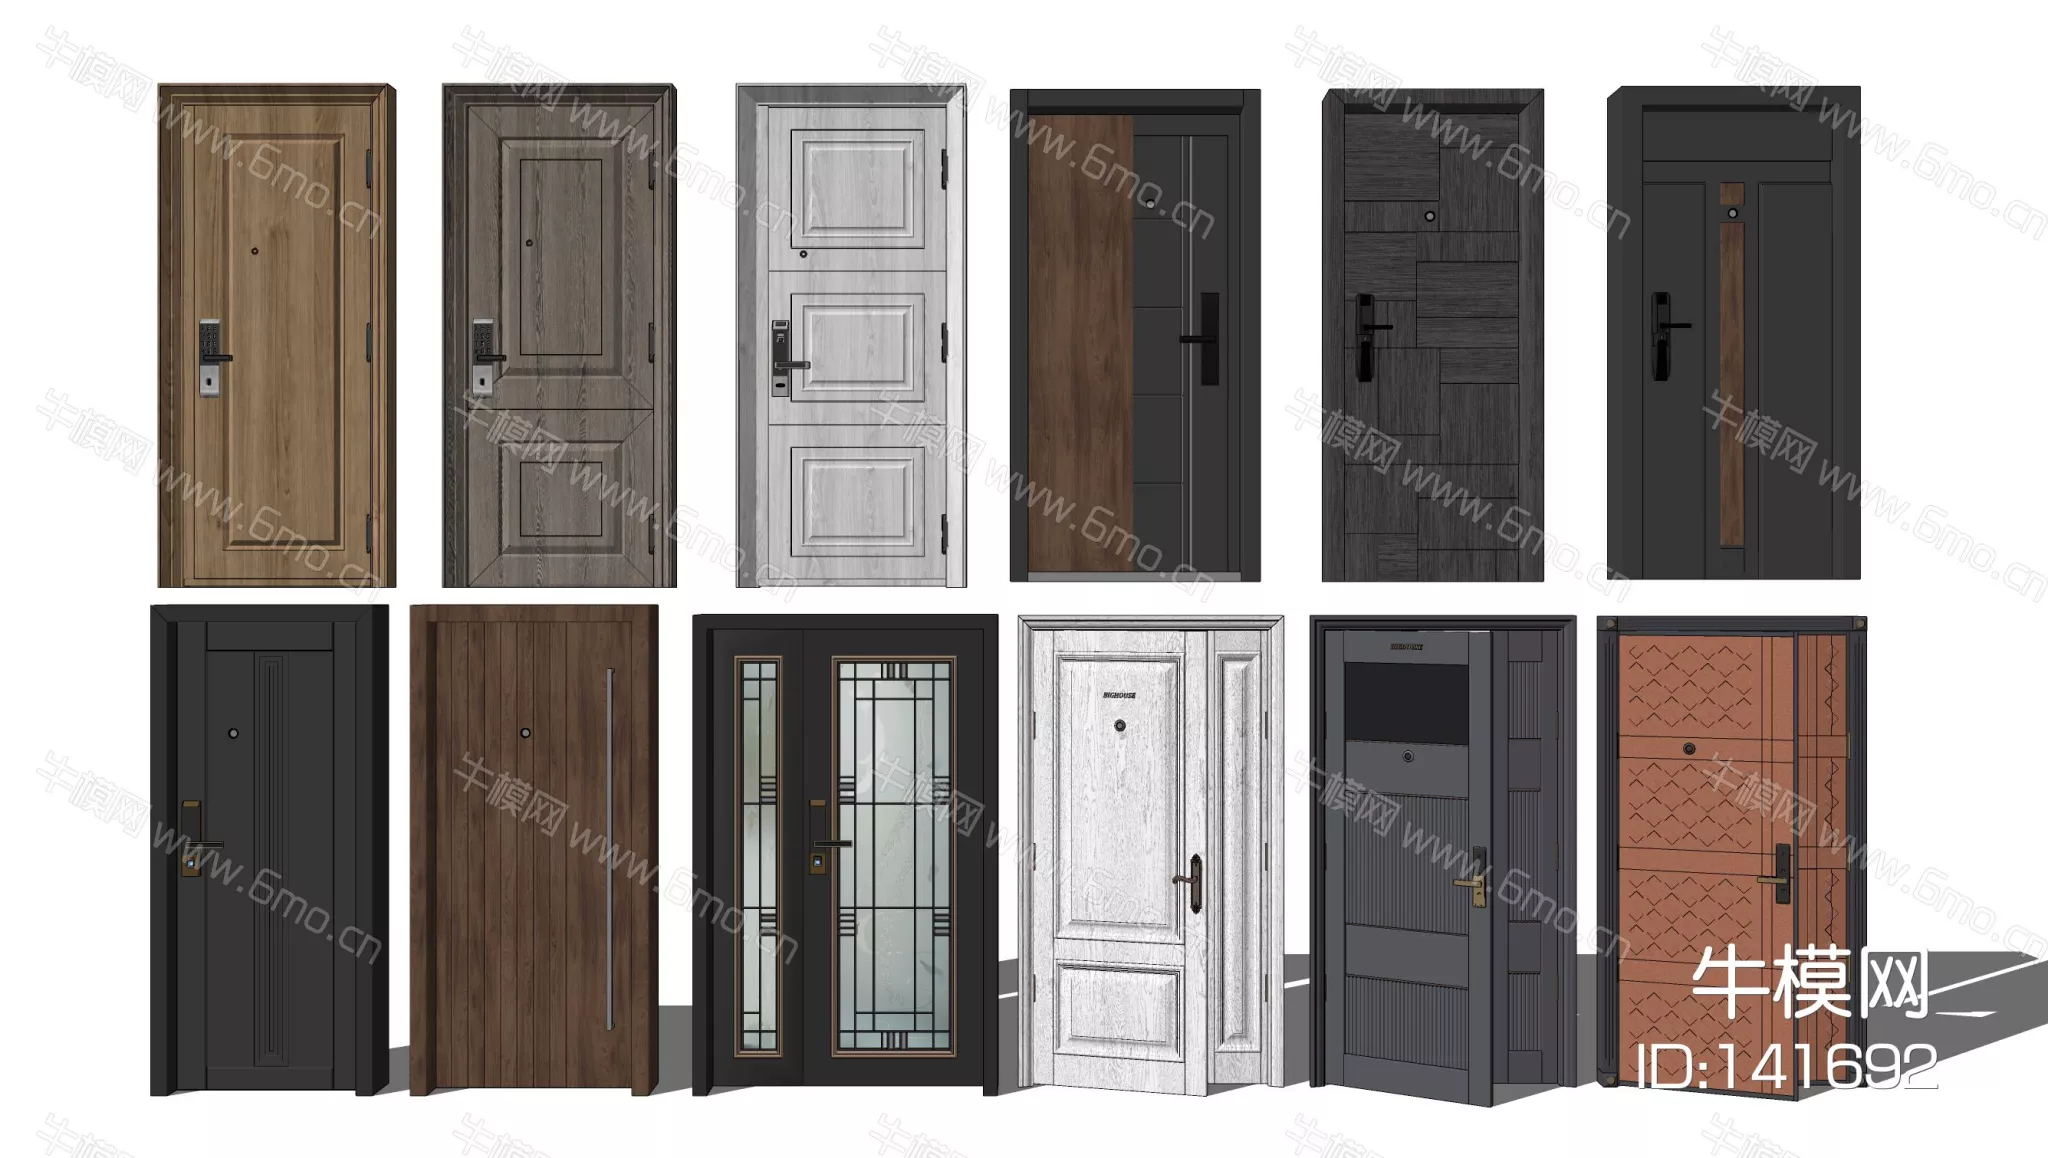 MODERN DOOR AND WINDOWS - SKETCHUP 3D MODEL - ENSCAPE - 141692